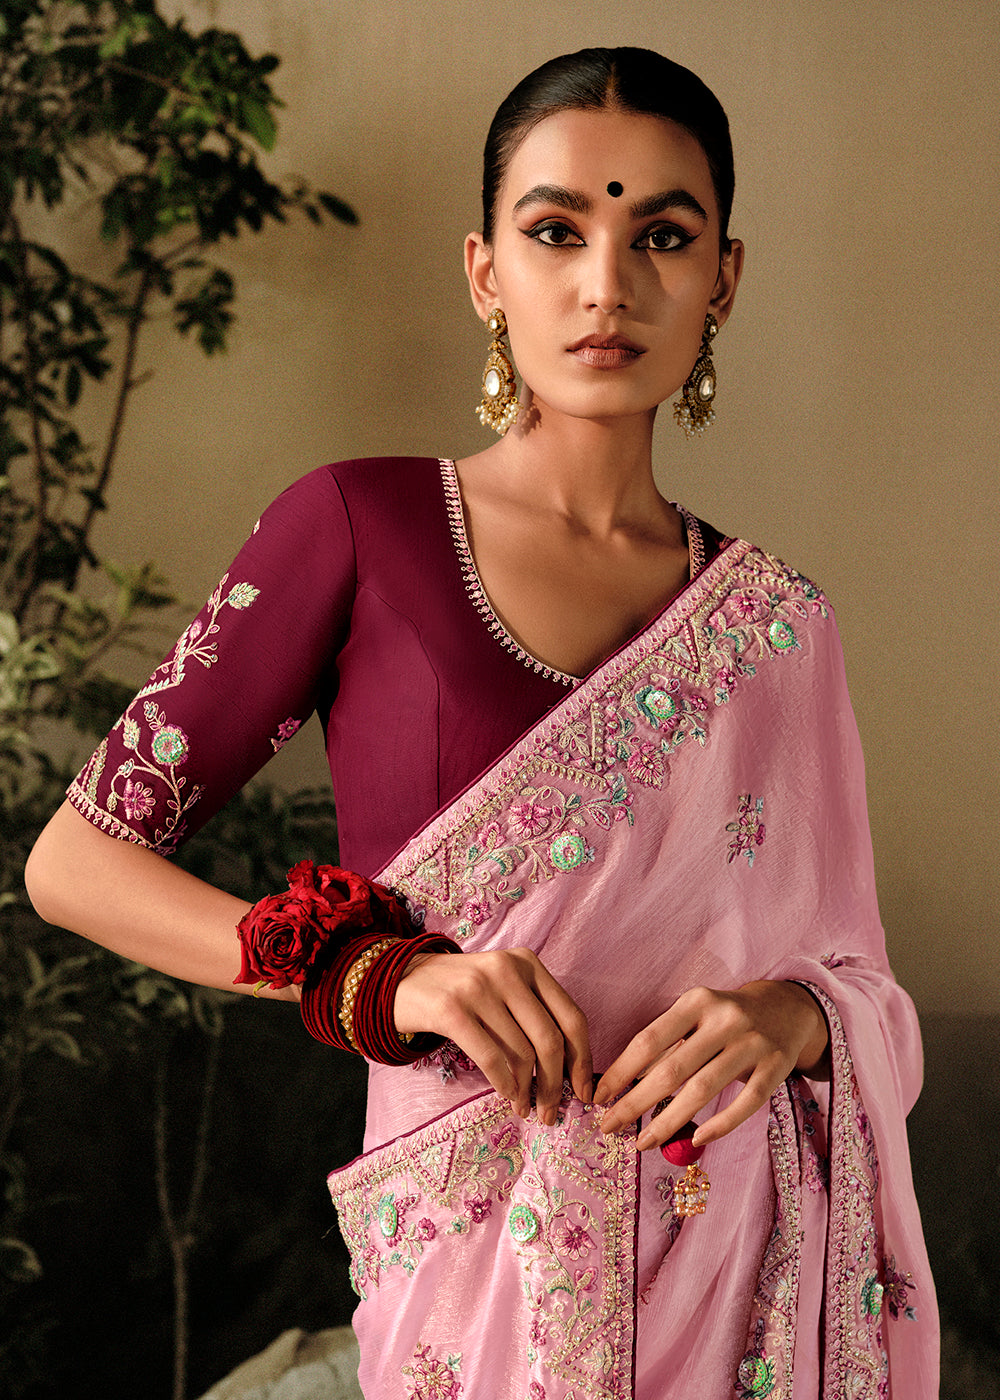 Buy Now Rose Pink Khatli Work Embroidered Designer Wedding Saree Online in USA, UK, Canada & Worldwide at Empress Clothing.